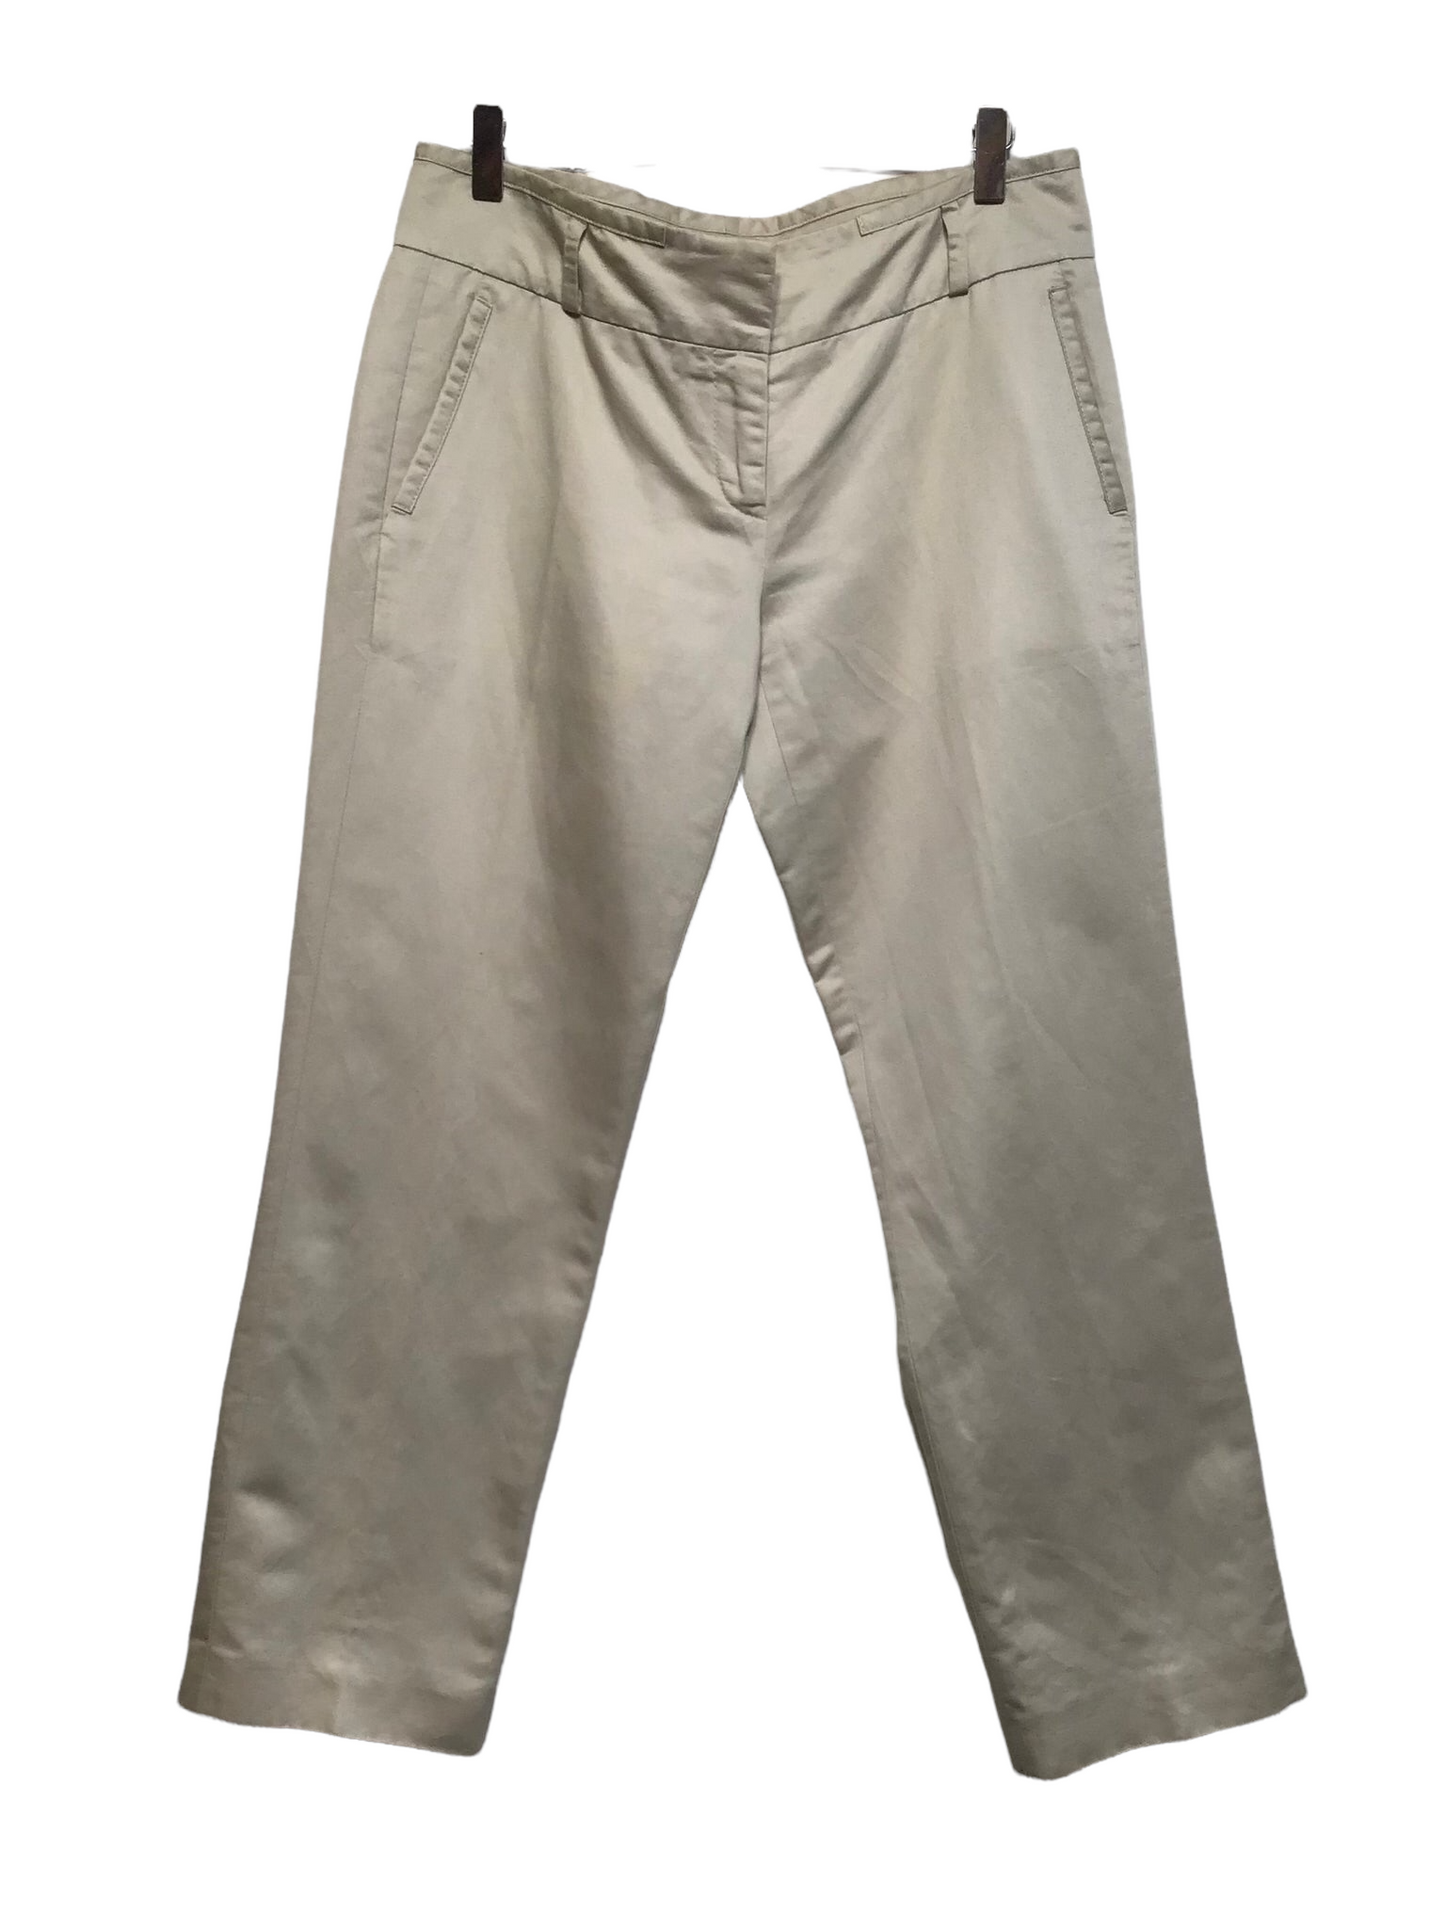 Hugo Boss Suit Trousers (Size M)